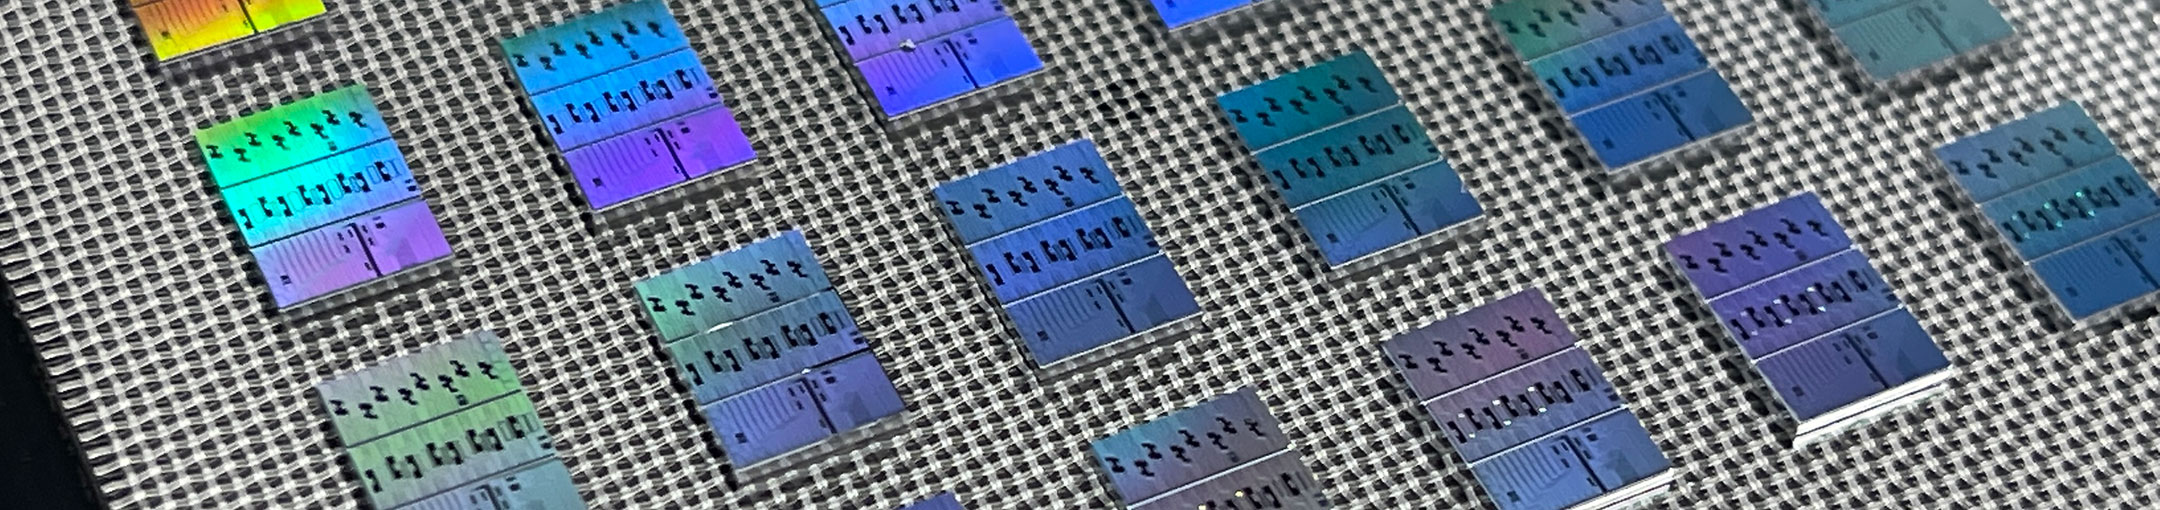 a closeup of computer electronics